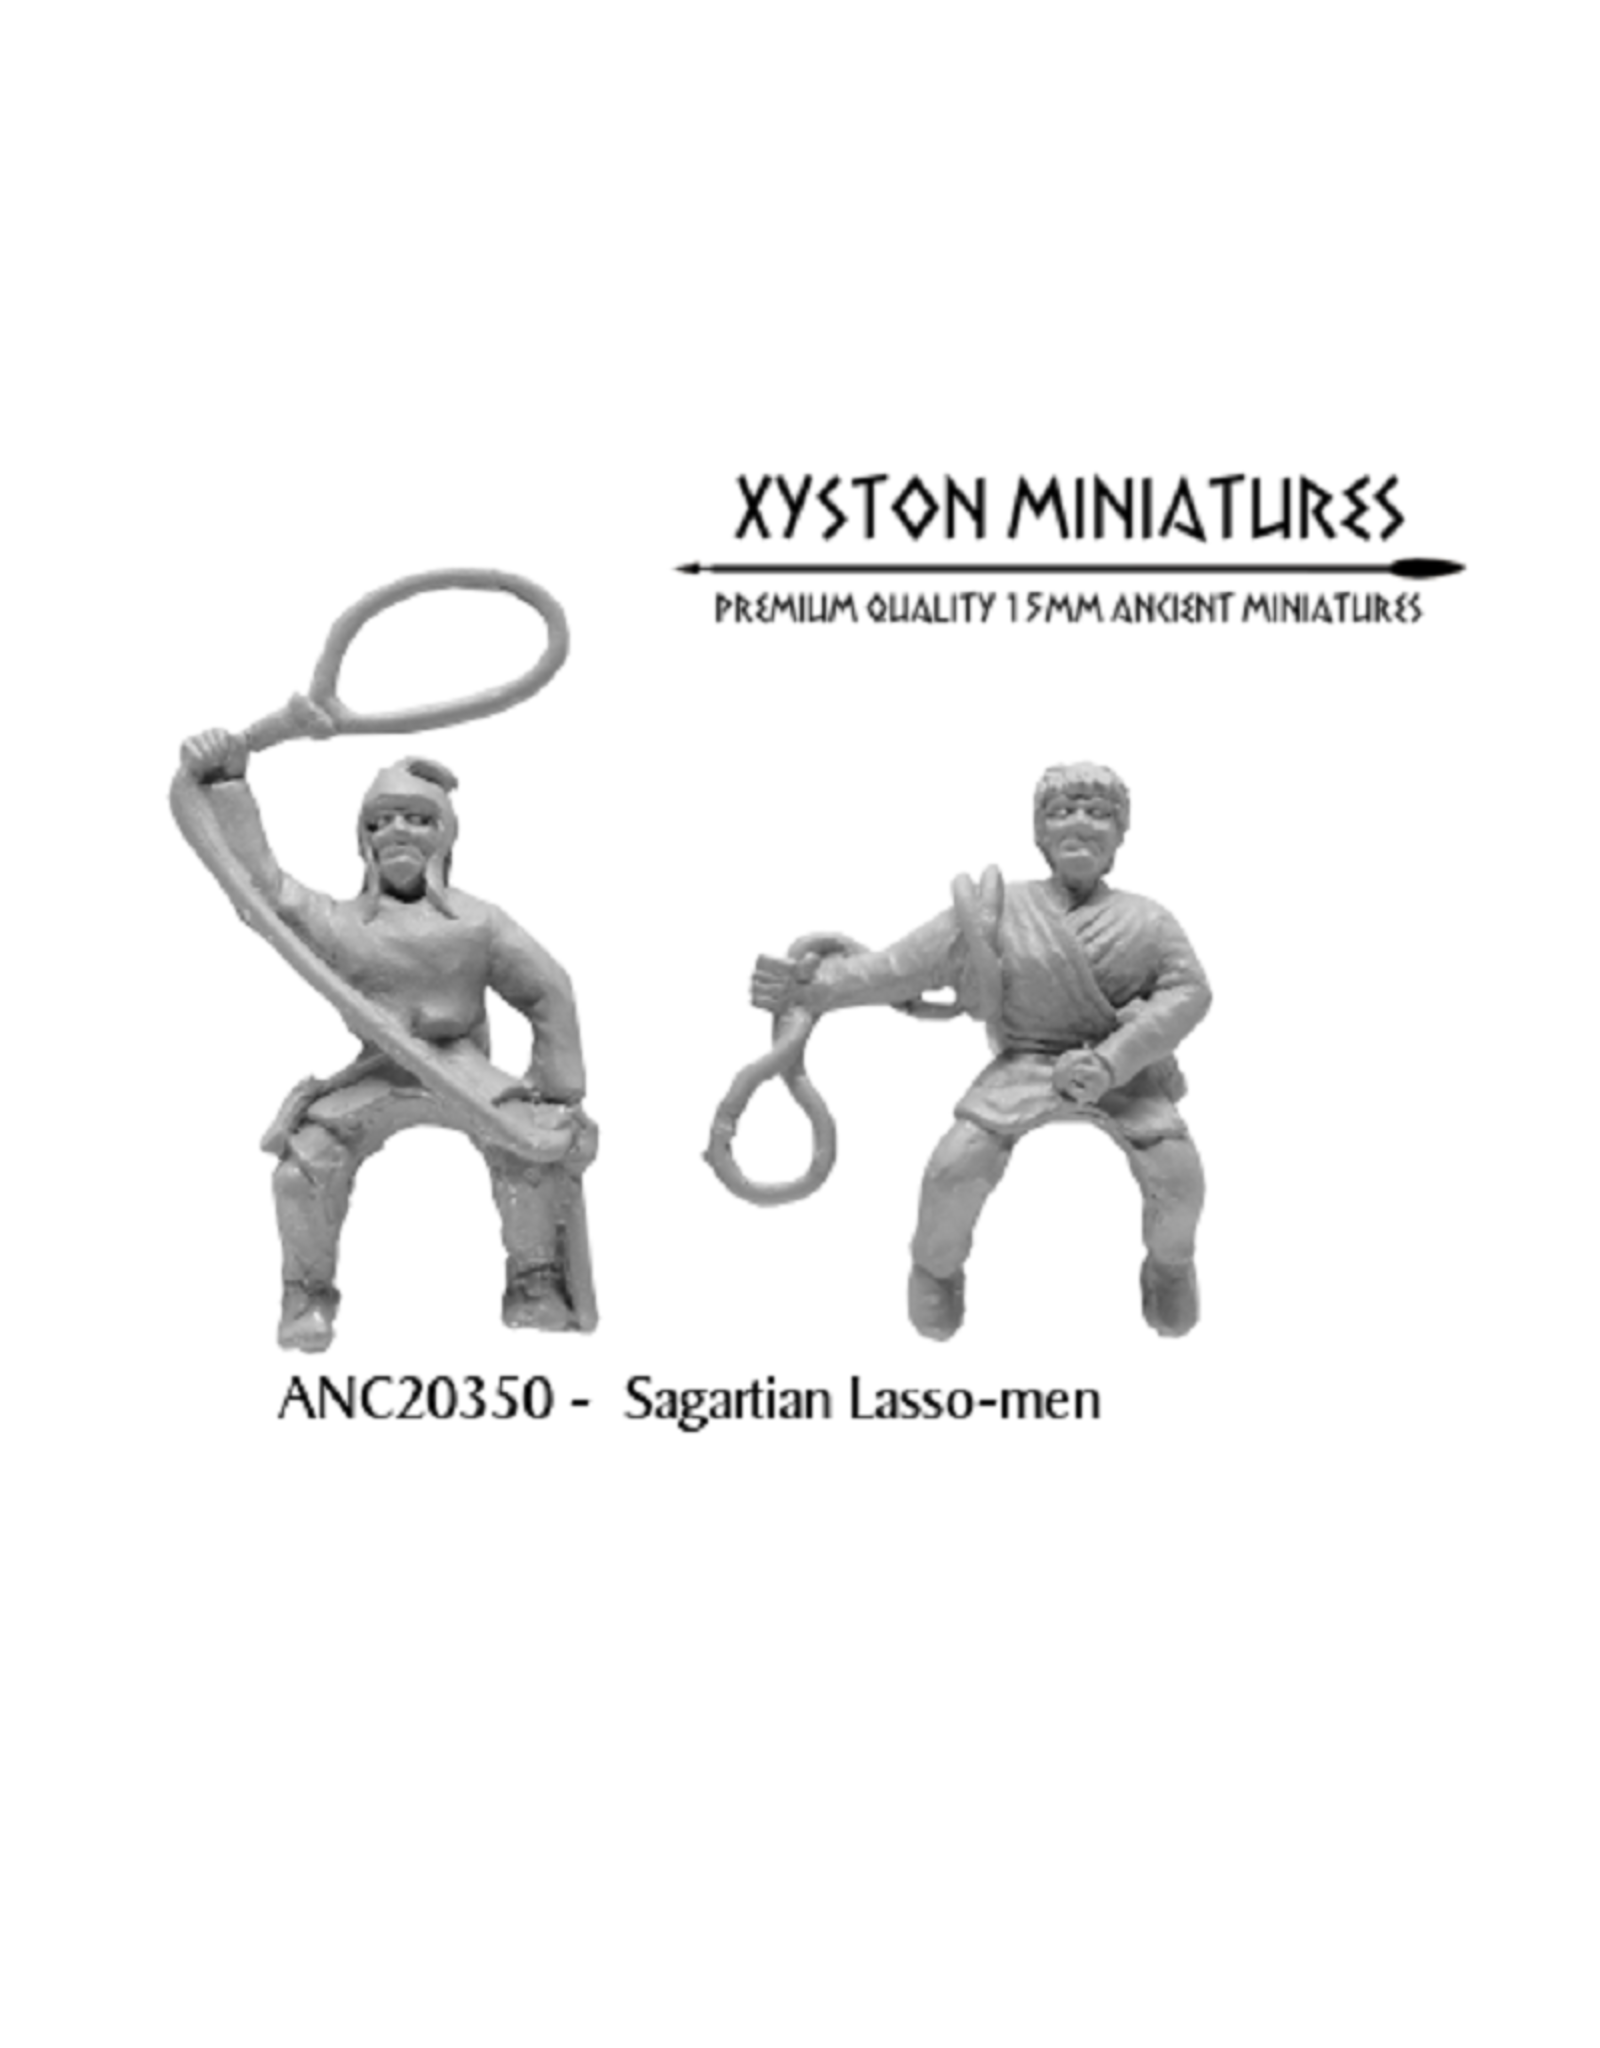 Xyston ANC20350 - Sagartian lasso-men